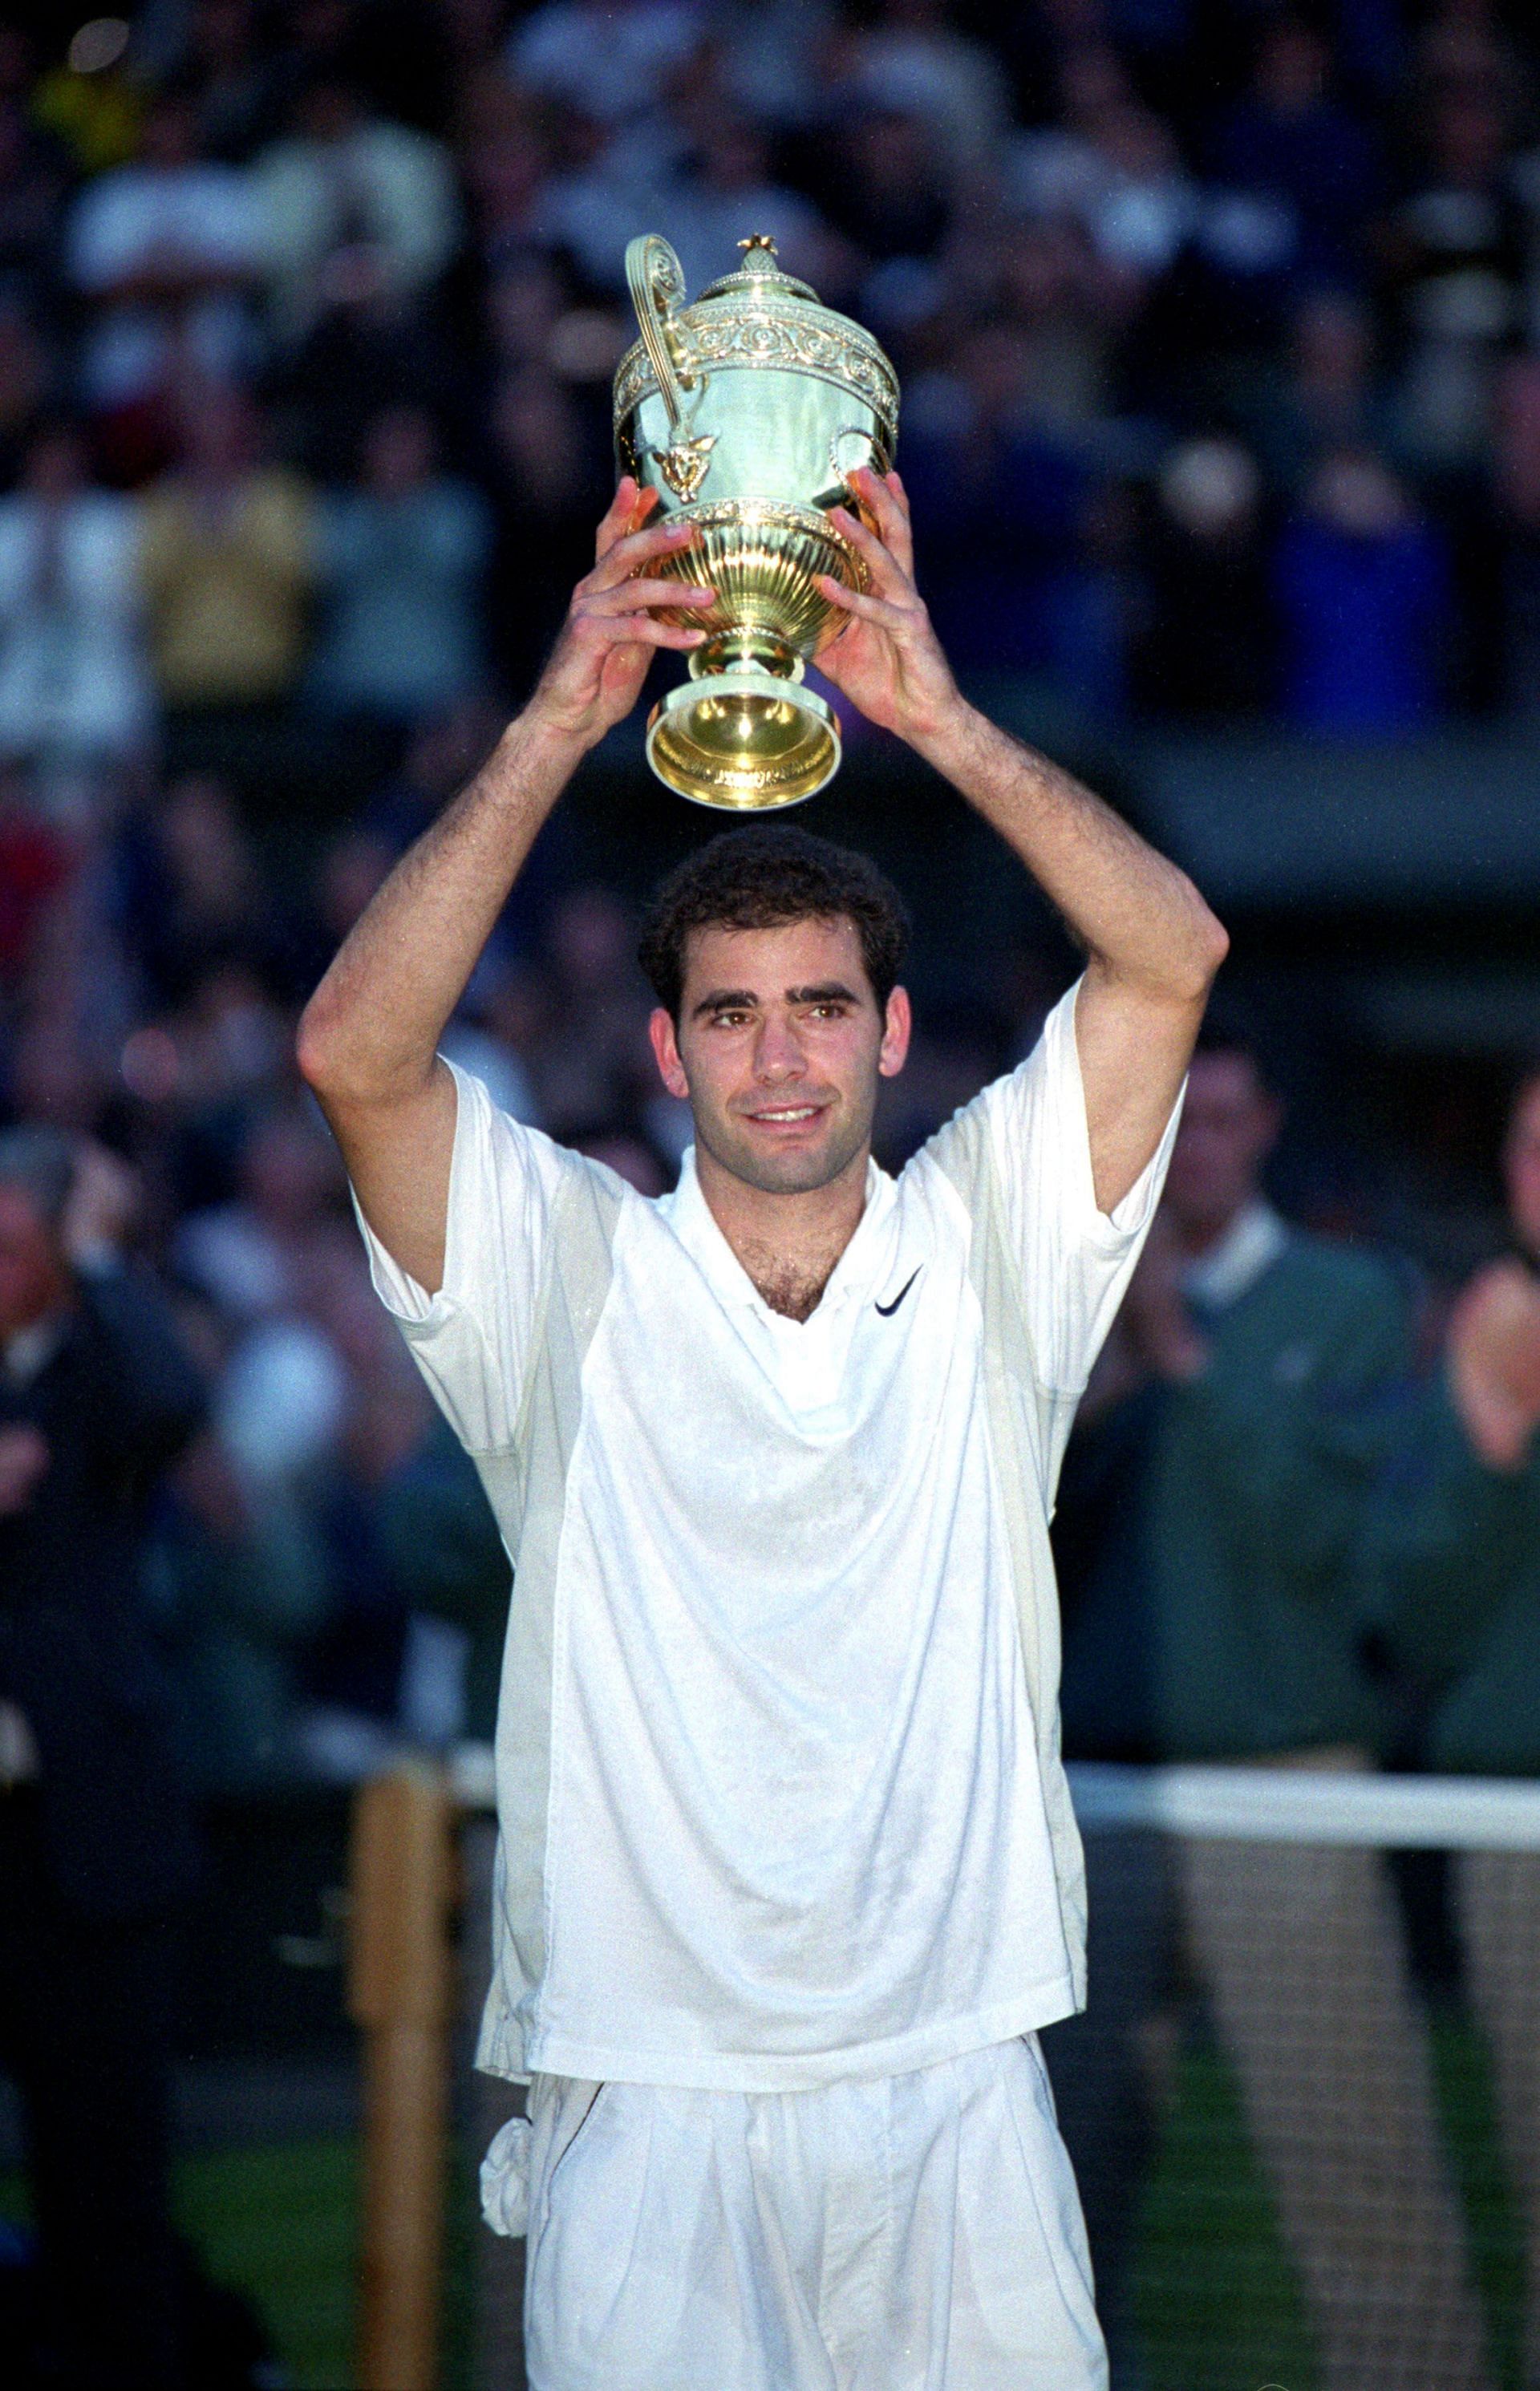 Pete Sampras won his seventh Wimbledon title in 2000.